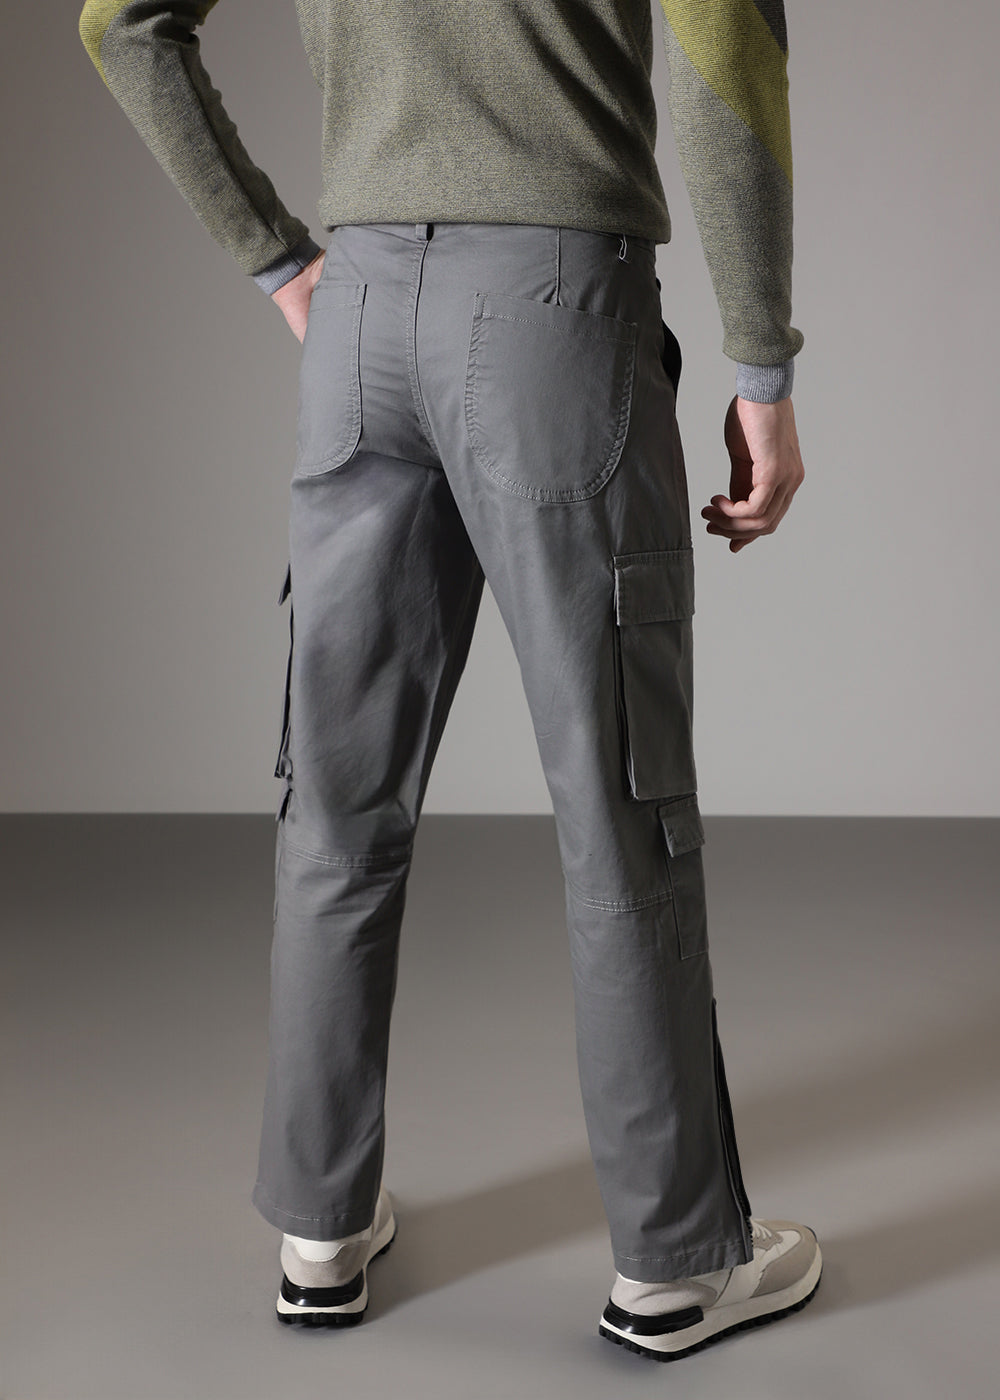 Artic Grey Zipper Cargo Pant